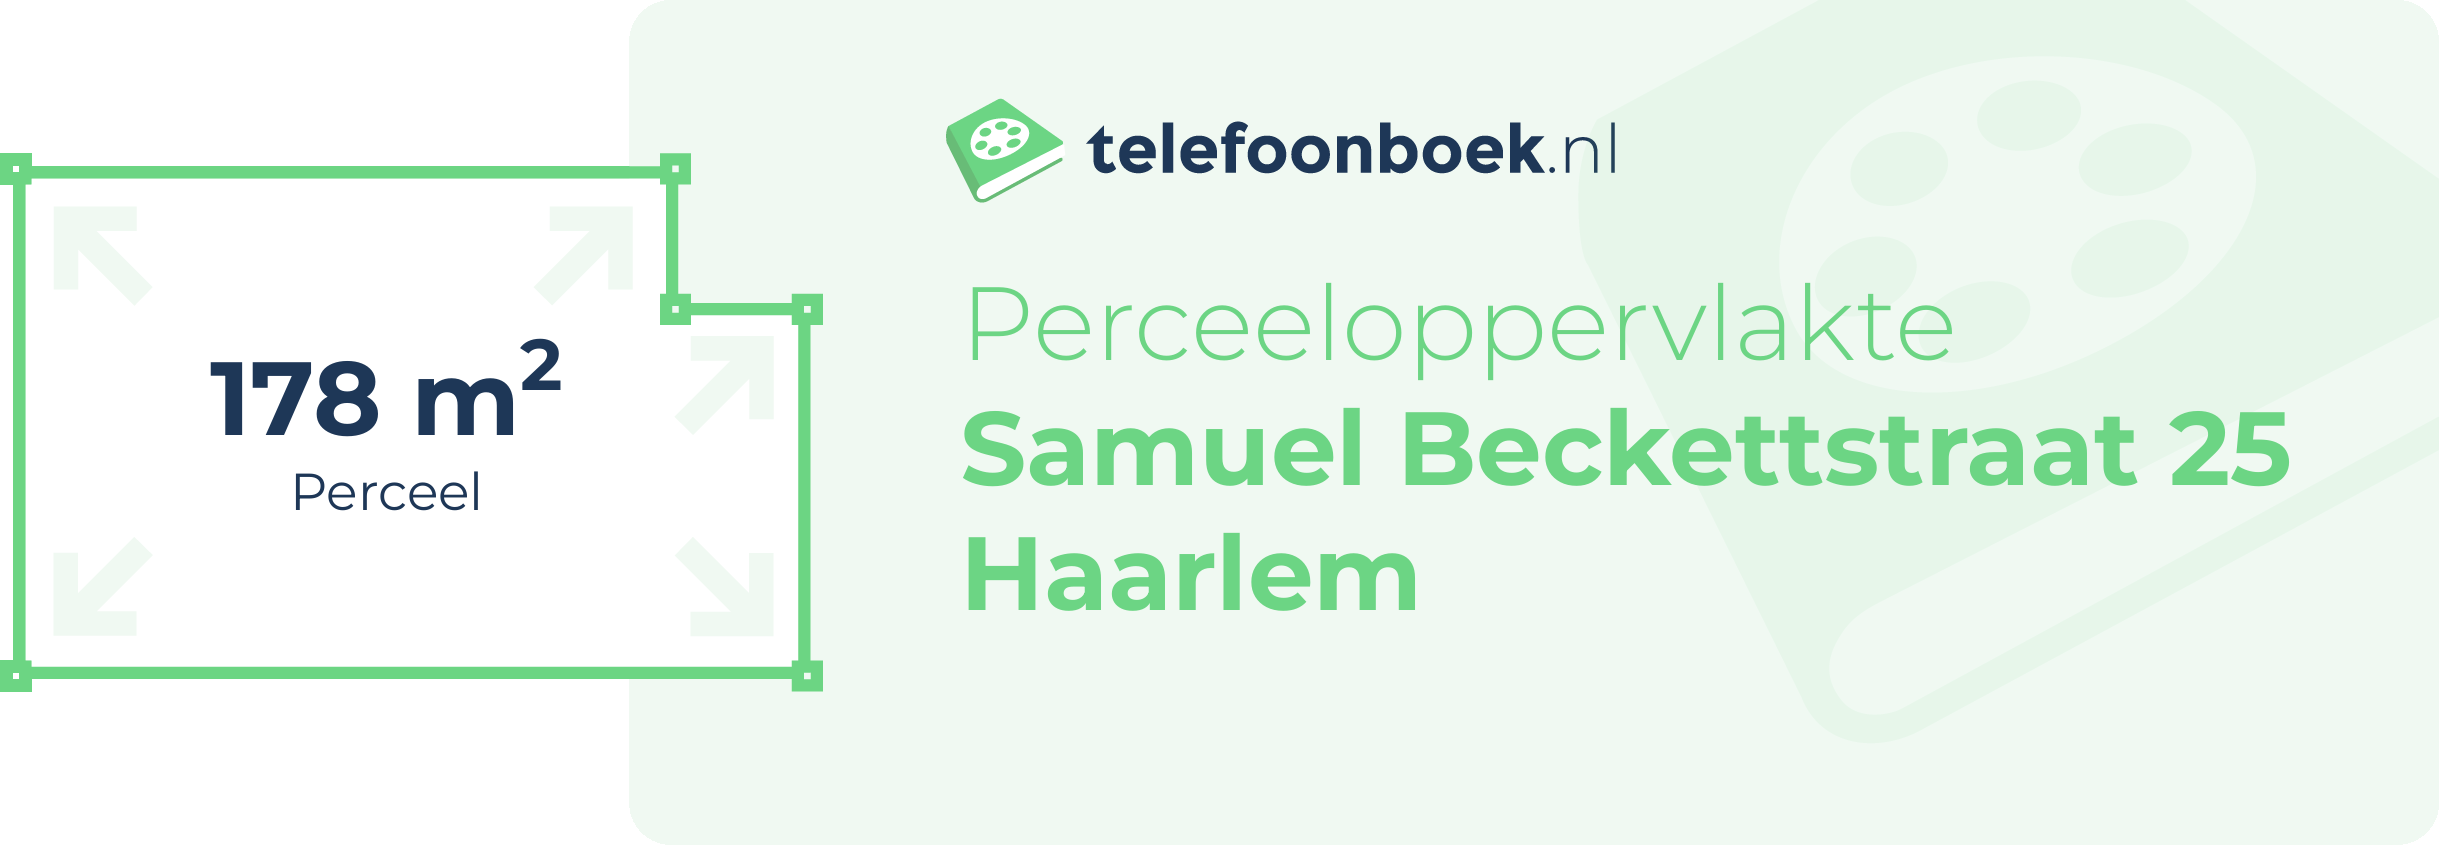 Perceeloppervlakte Samuel Beckettstraat 25 Haarlem